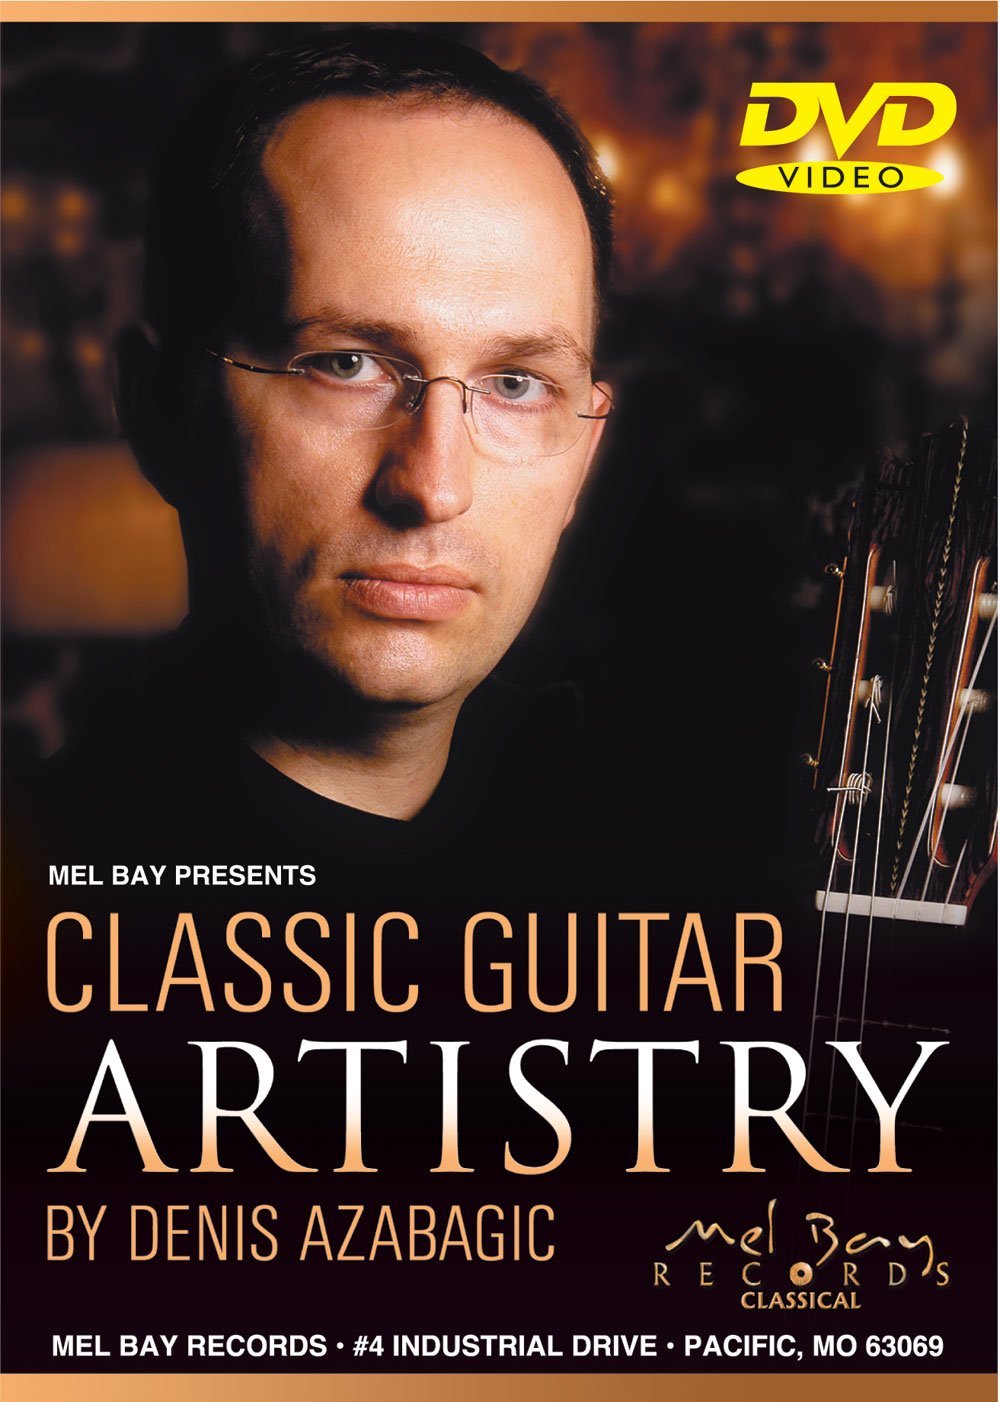 Classic Guitar Artistry DVD – Lark in the Morning